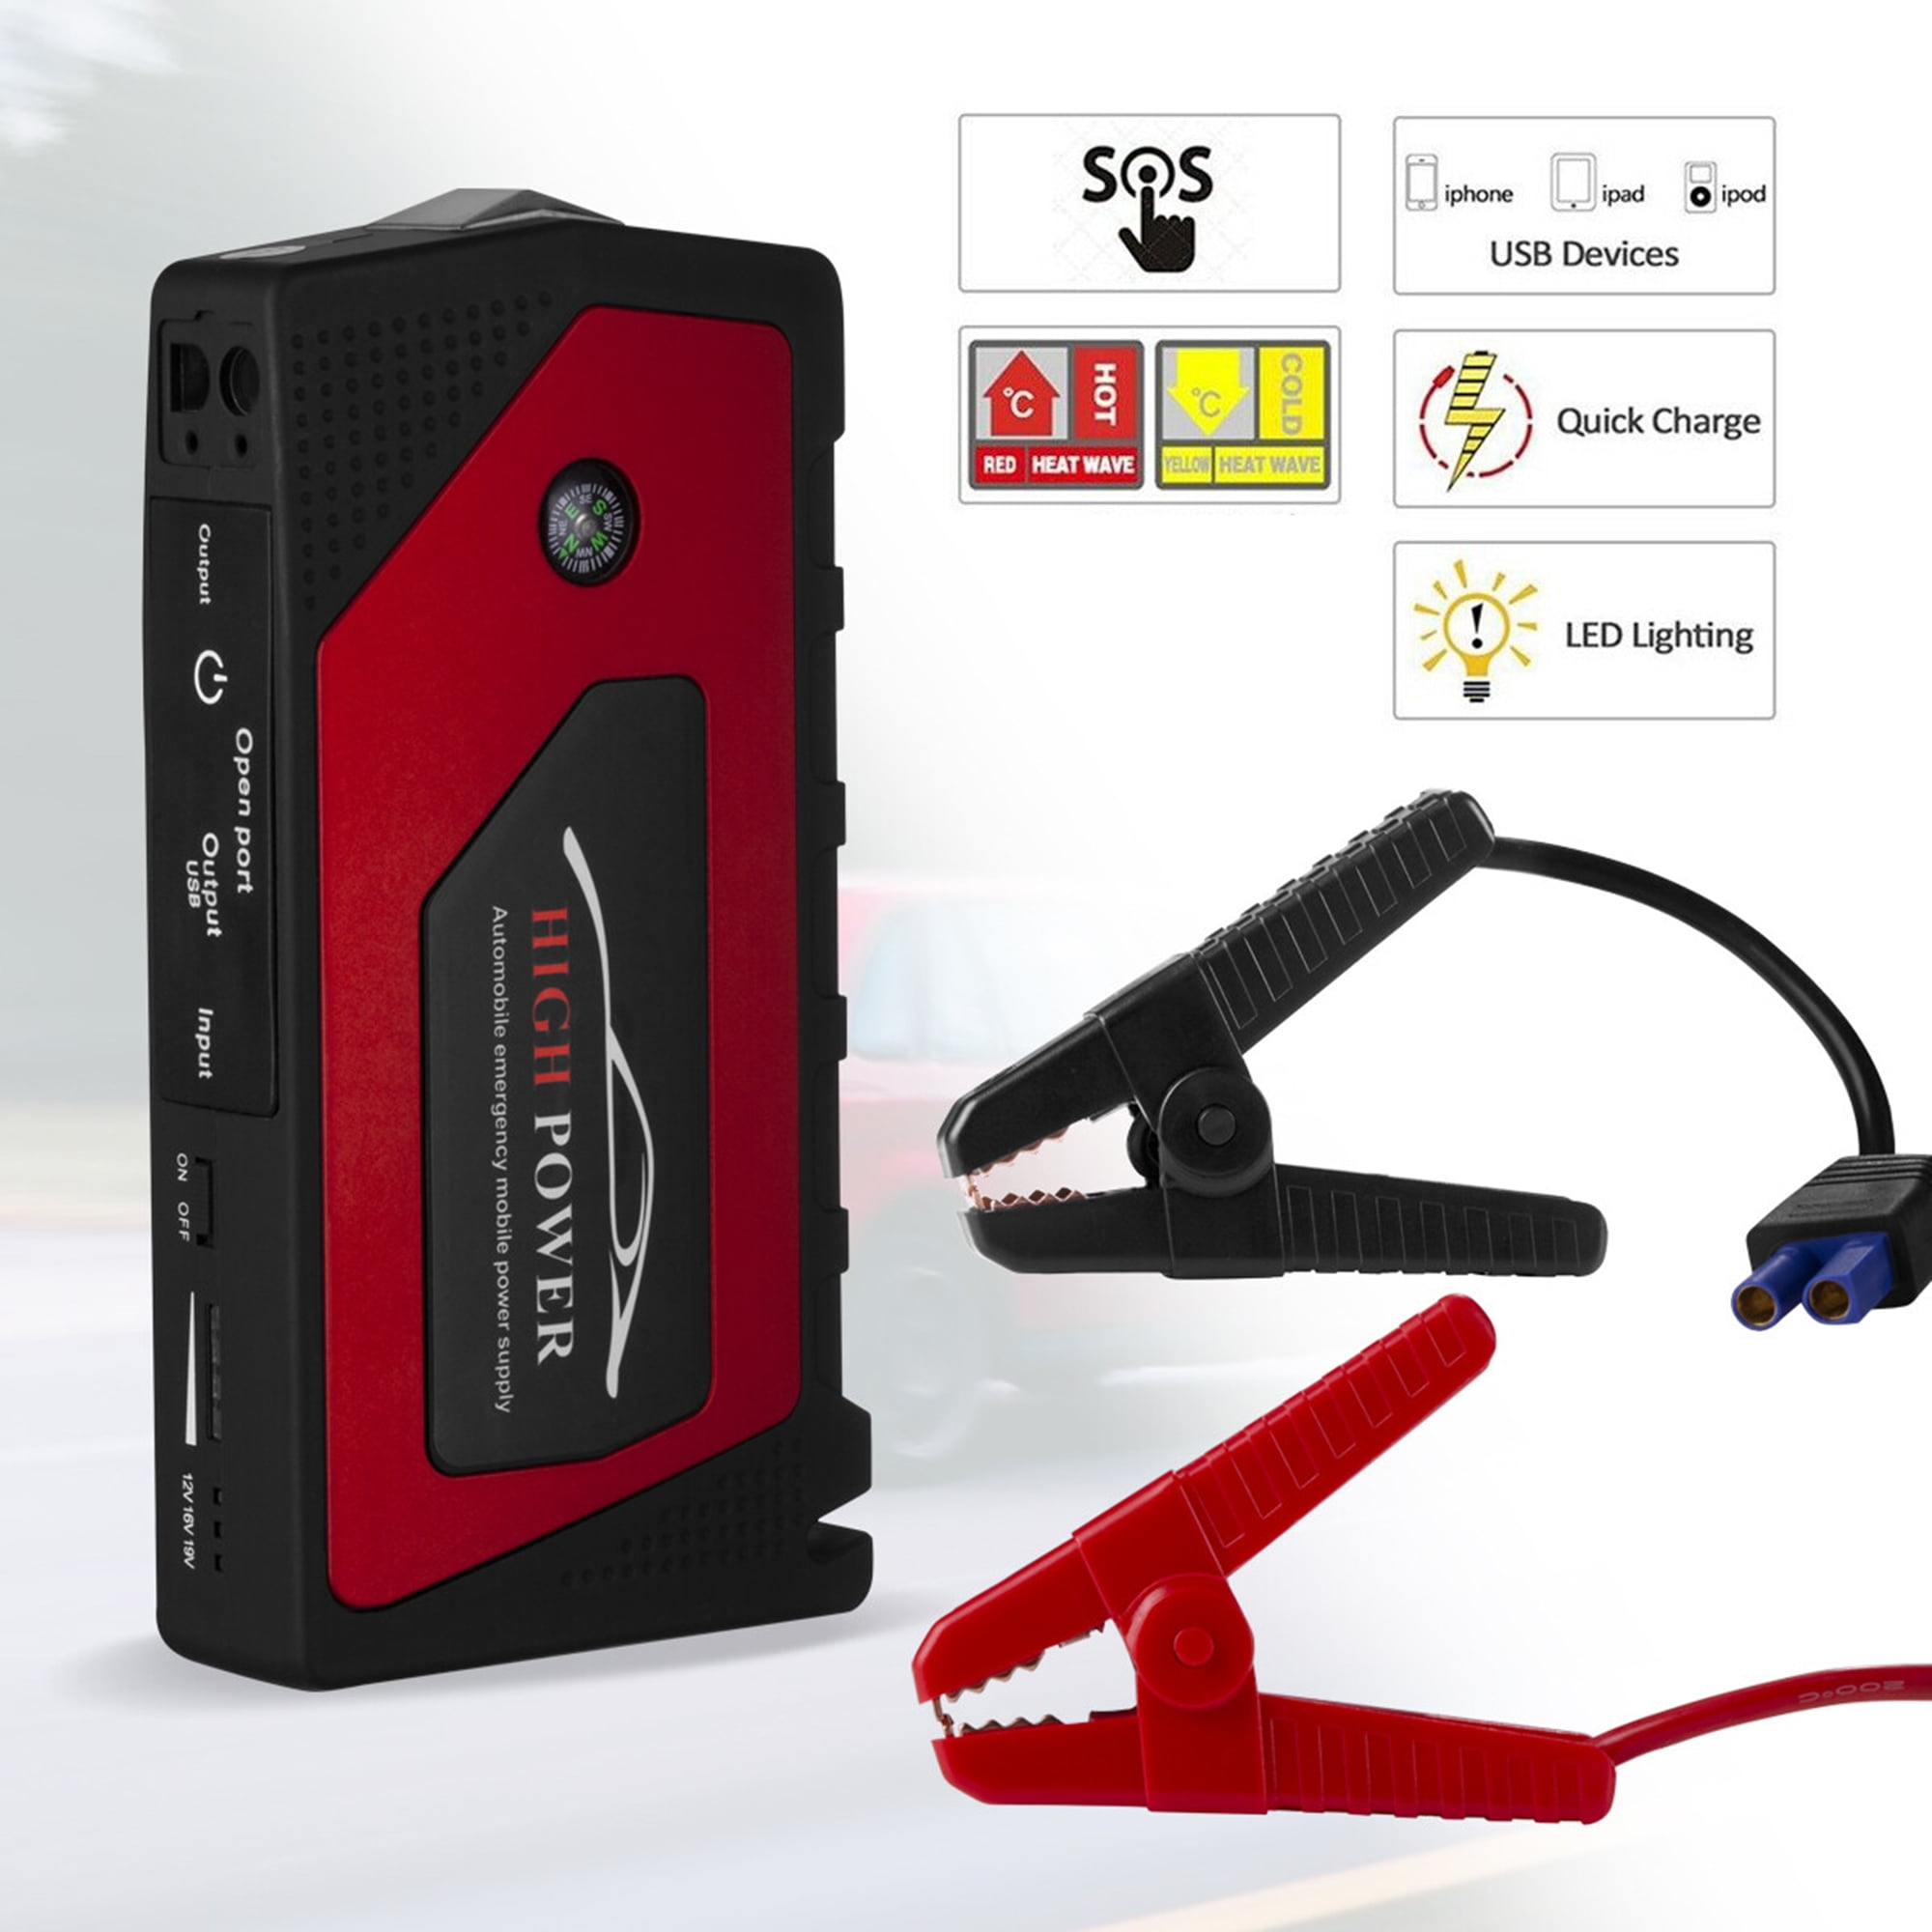 69800mAh 12V Car Jump Starter Portable 4 USB Port Charger LED